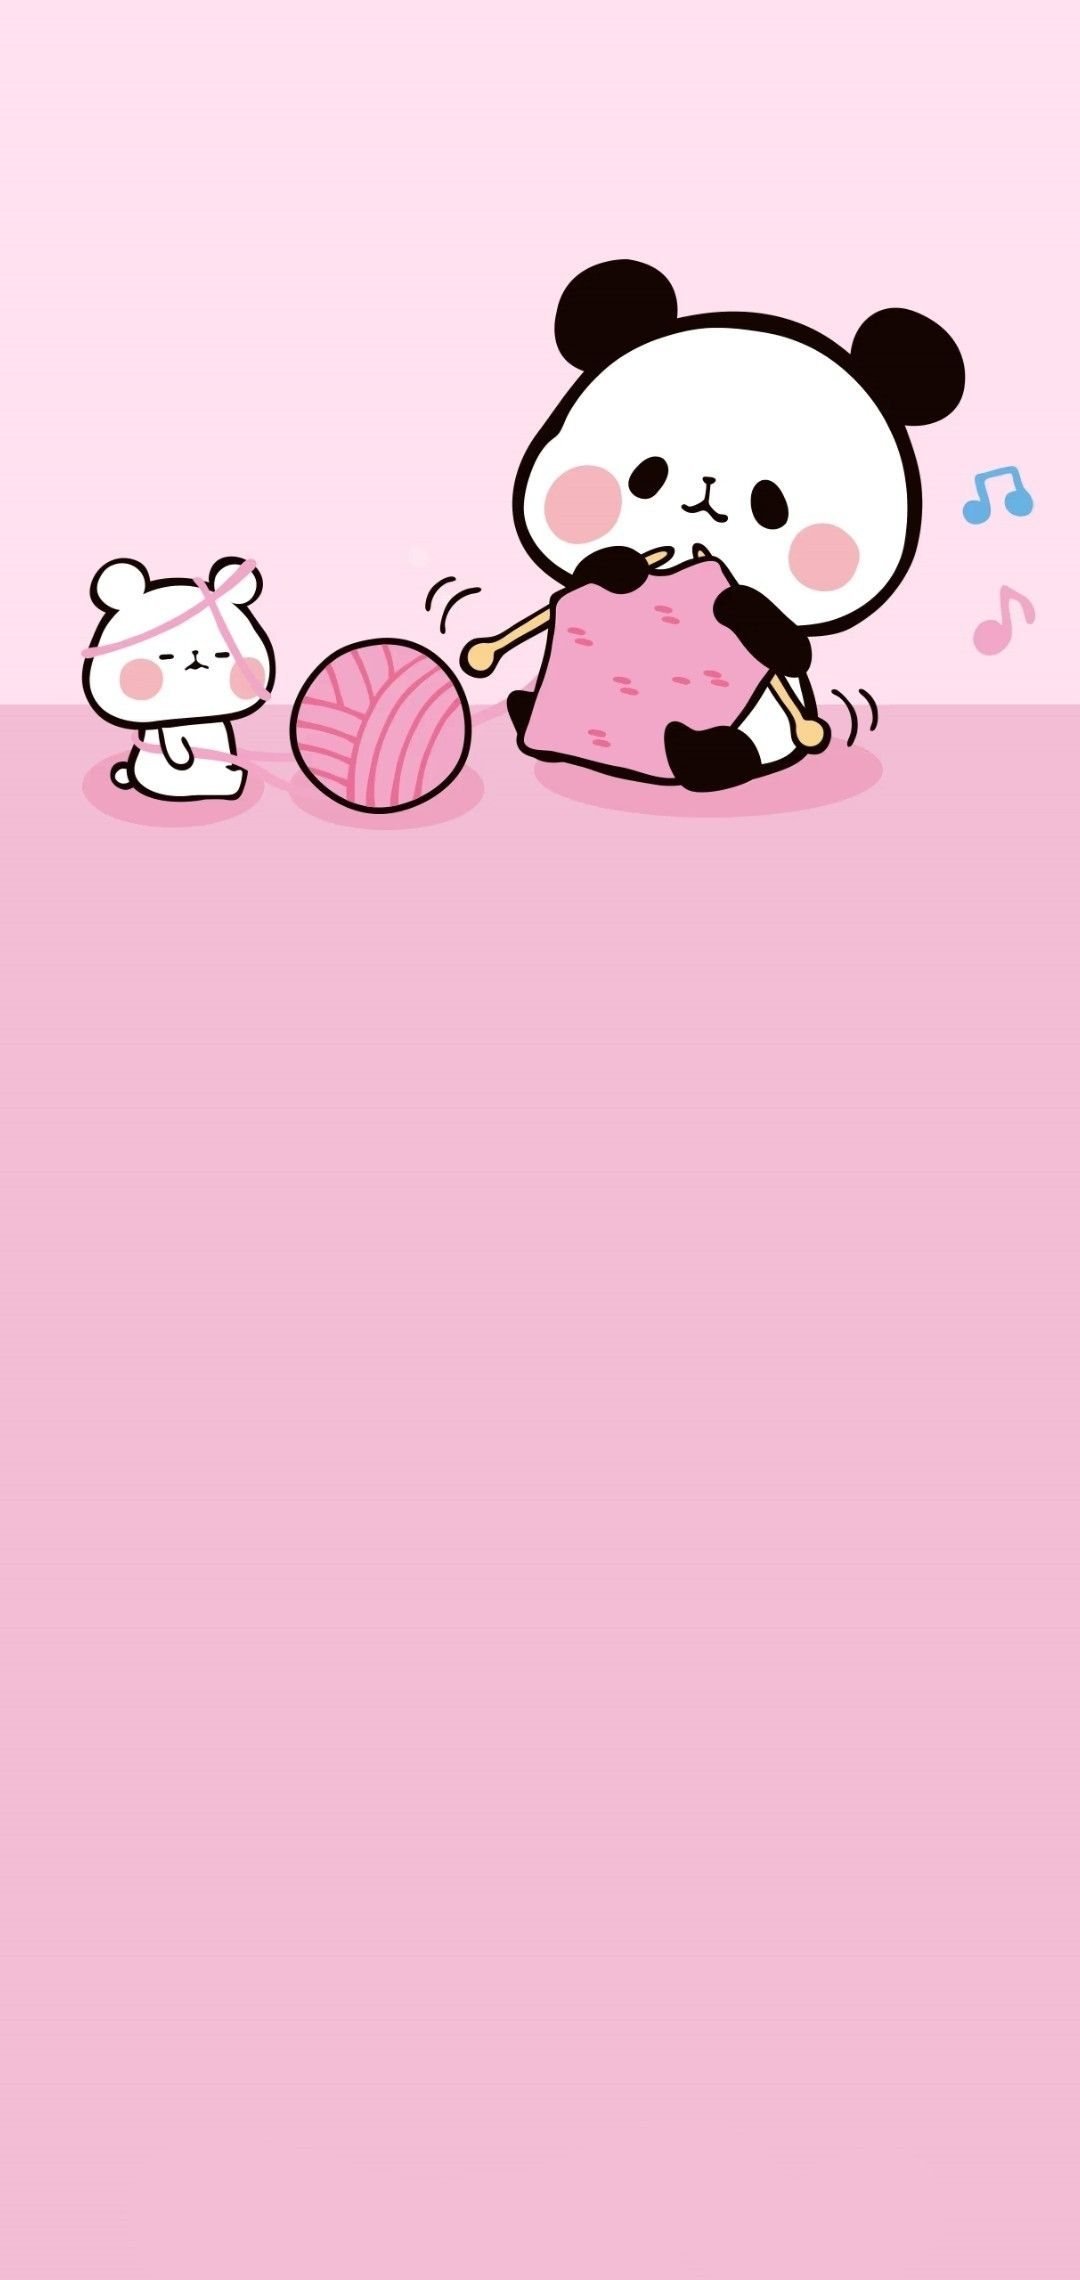 1080x2280 Pin by Denisse Mac&Atilde;&shy;as on Pink Backgrounds | Unicorn wallpaper cute, Cartoon wallpaper iphone, Wallpaper iphone cute